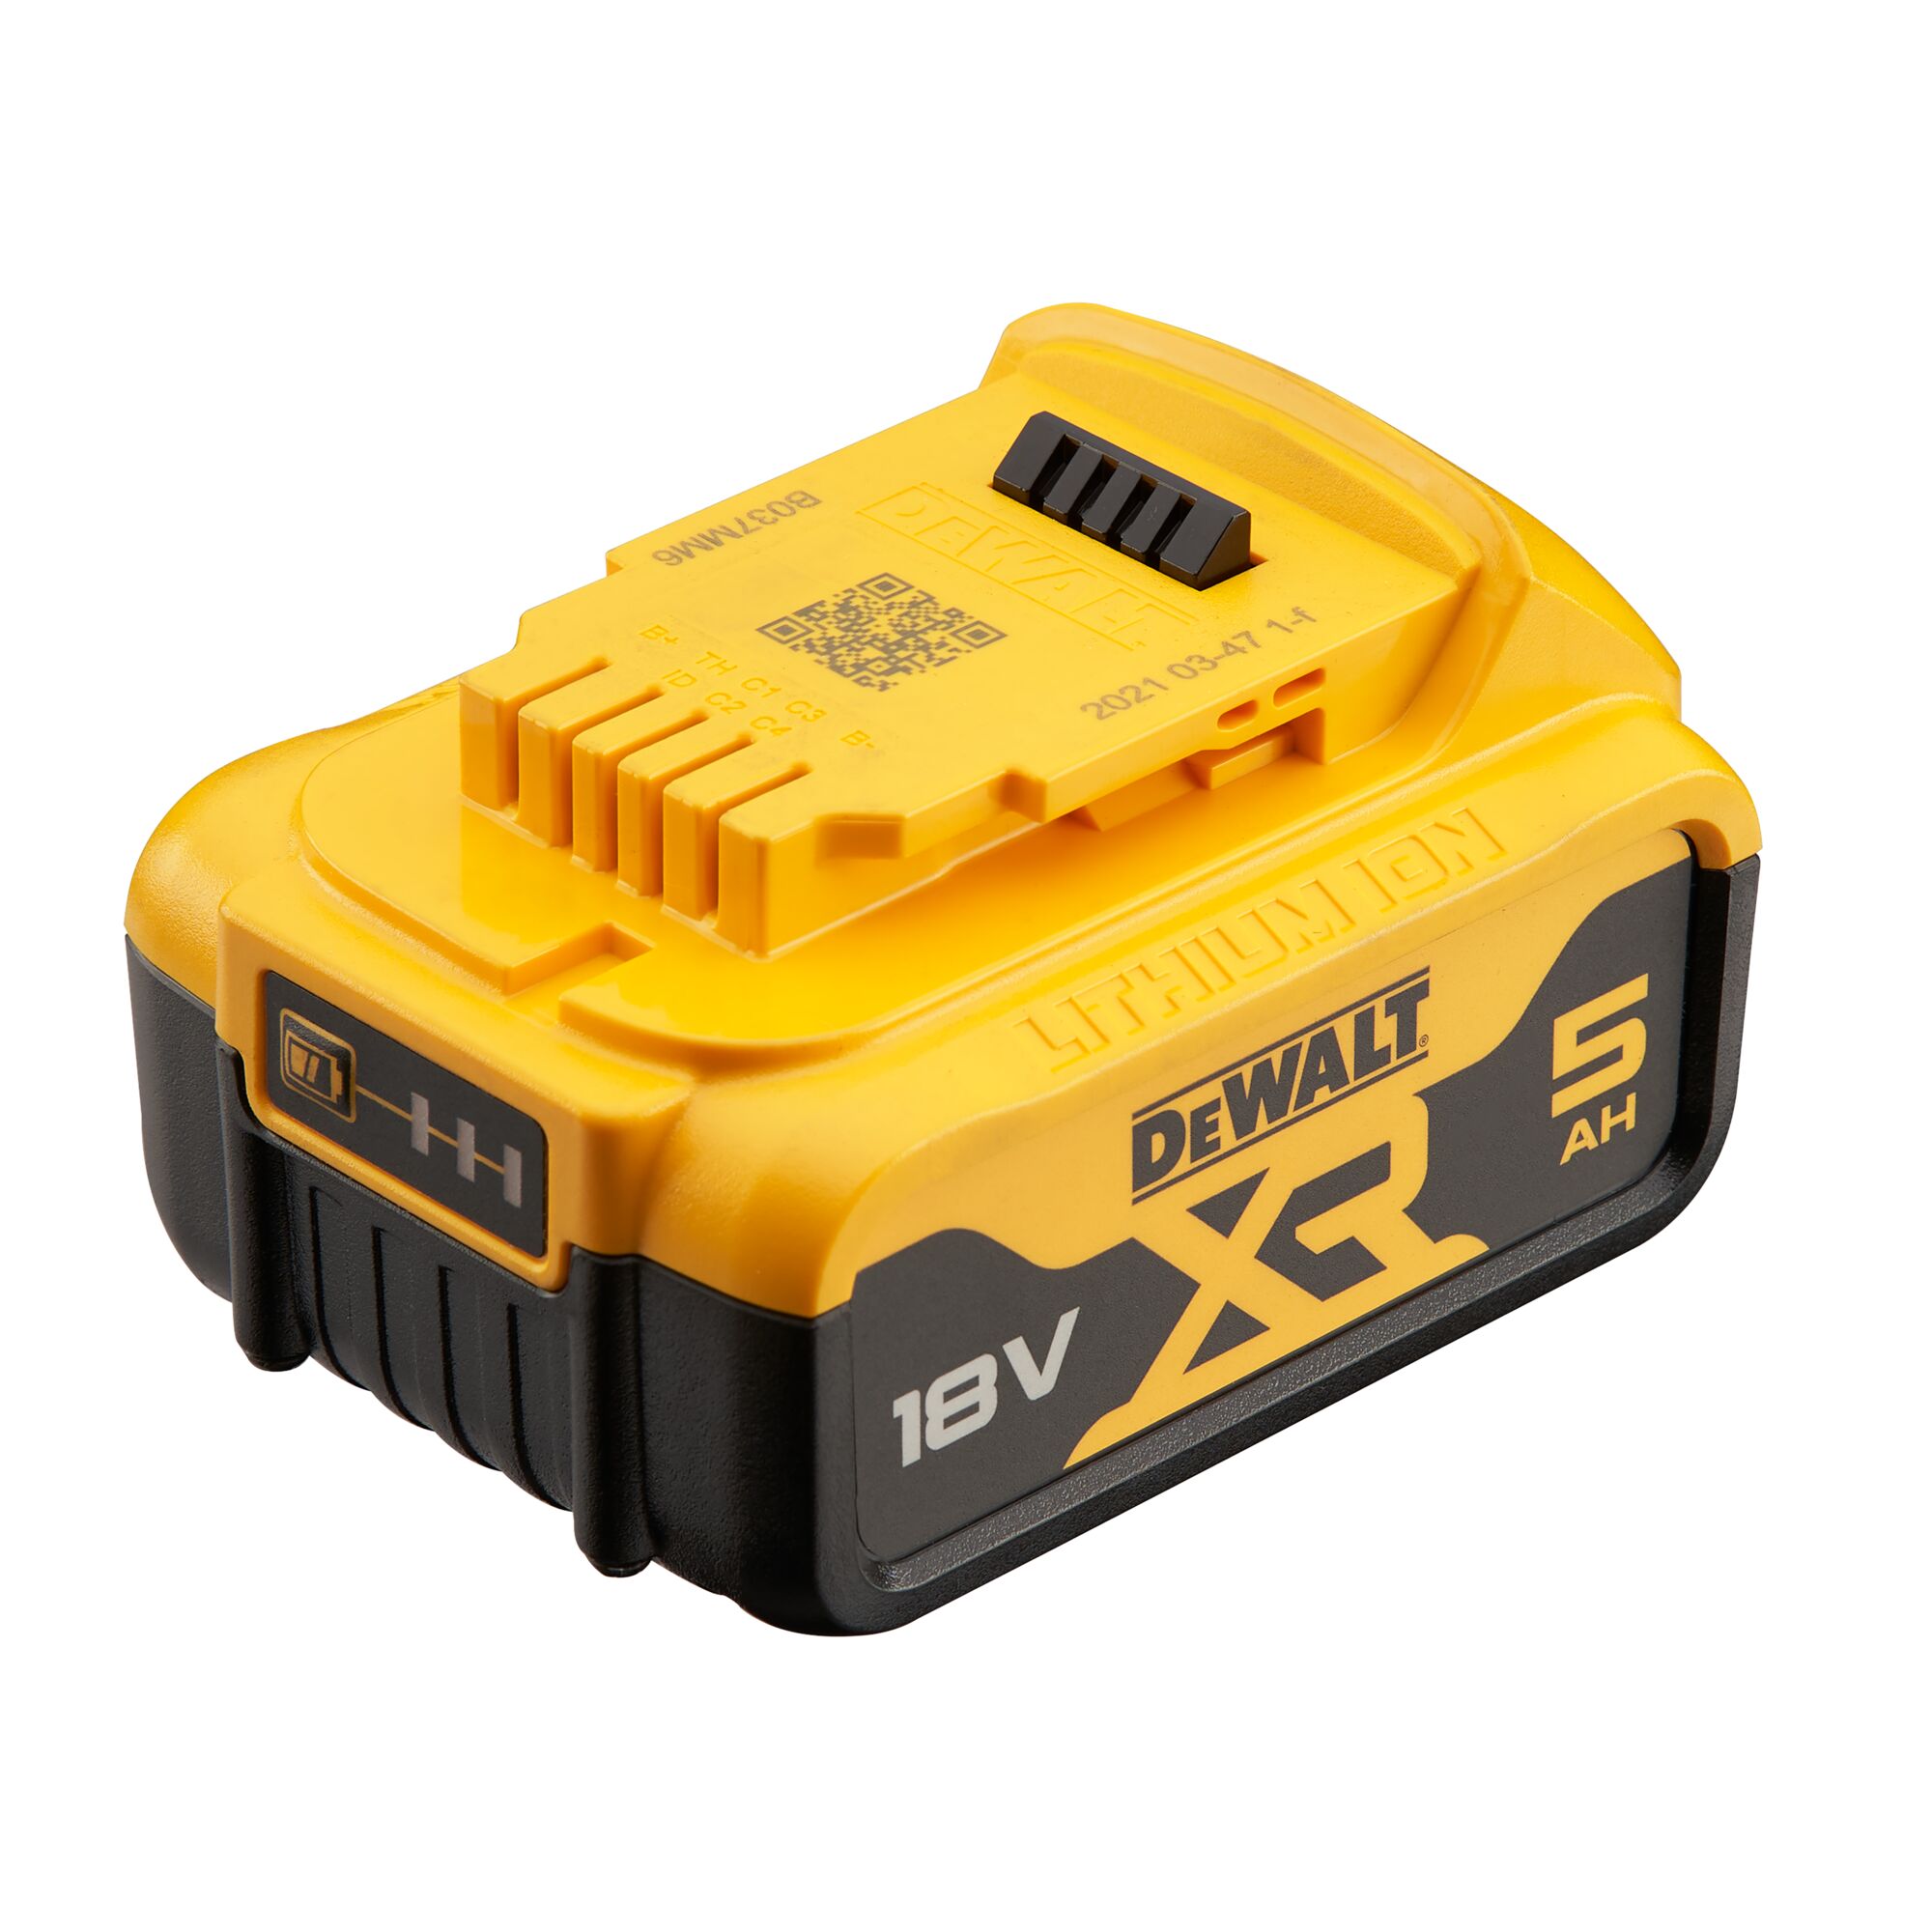 20V MAX 5.0 AH XR Battery | DEWALT